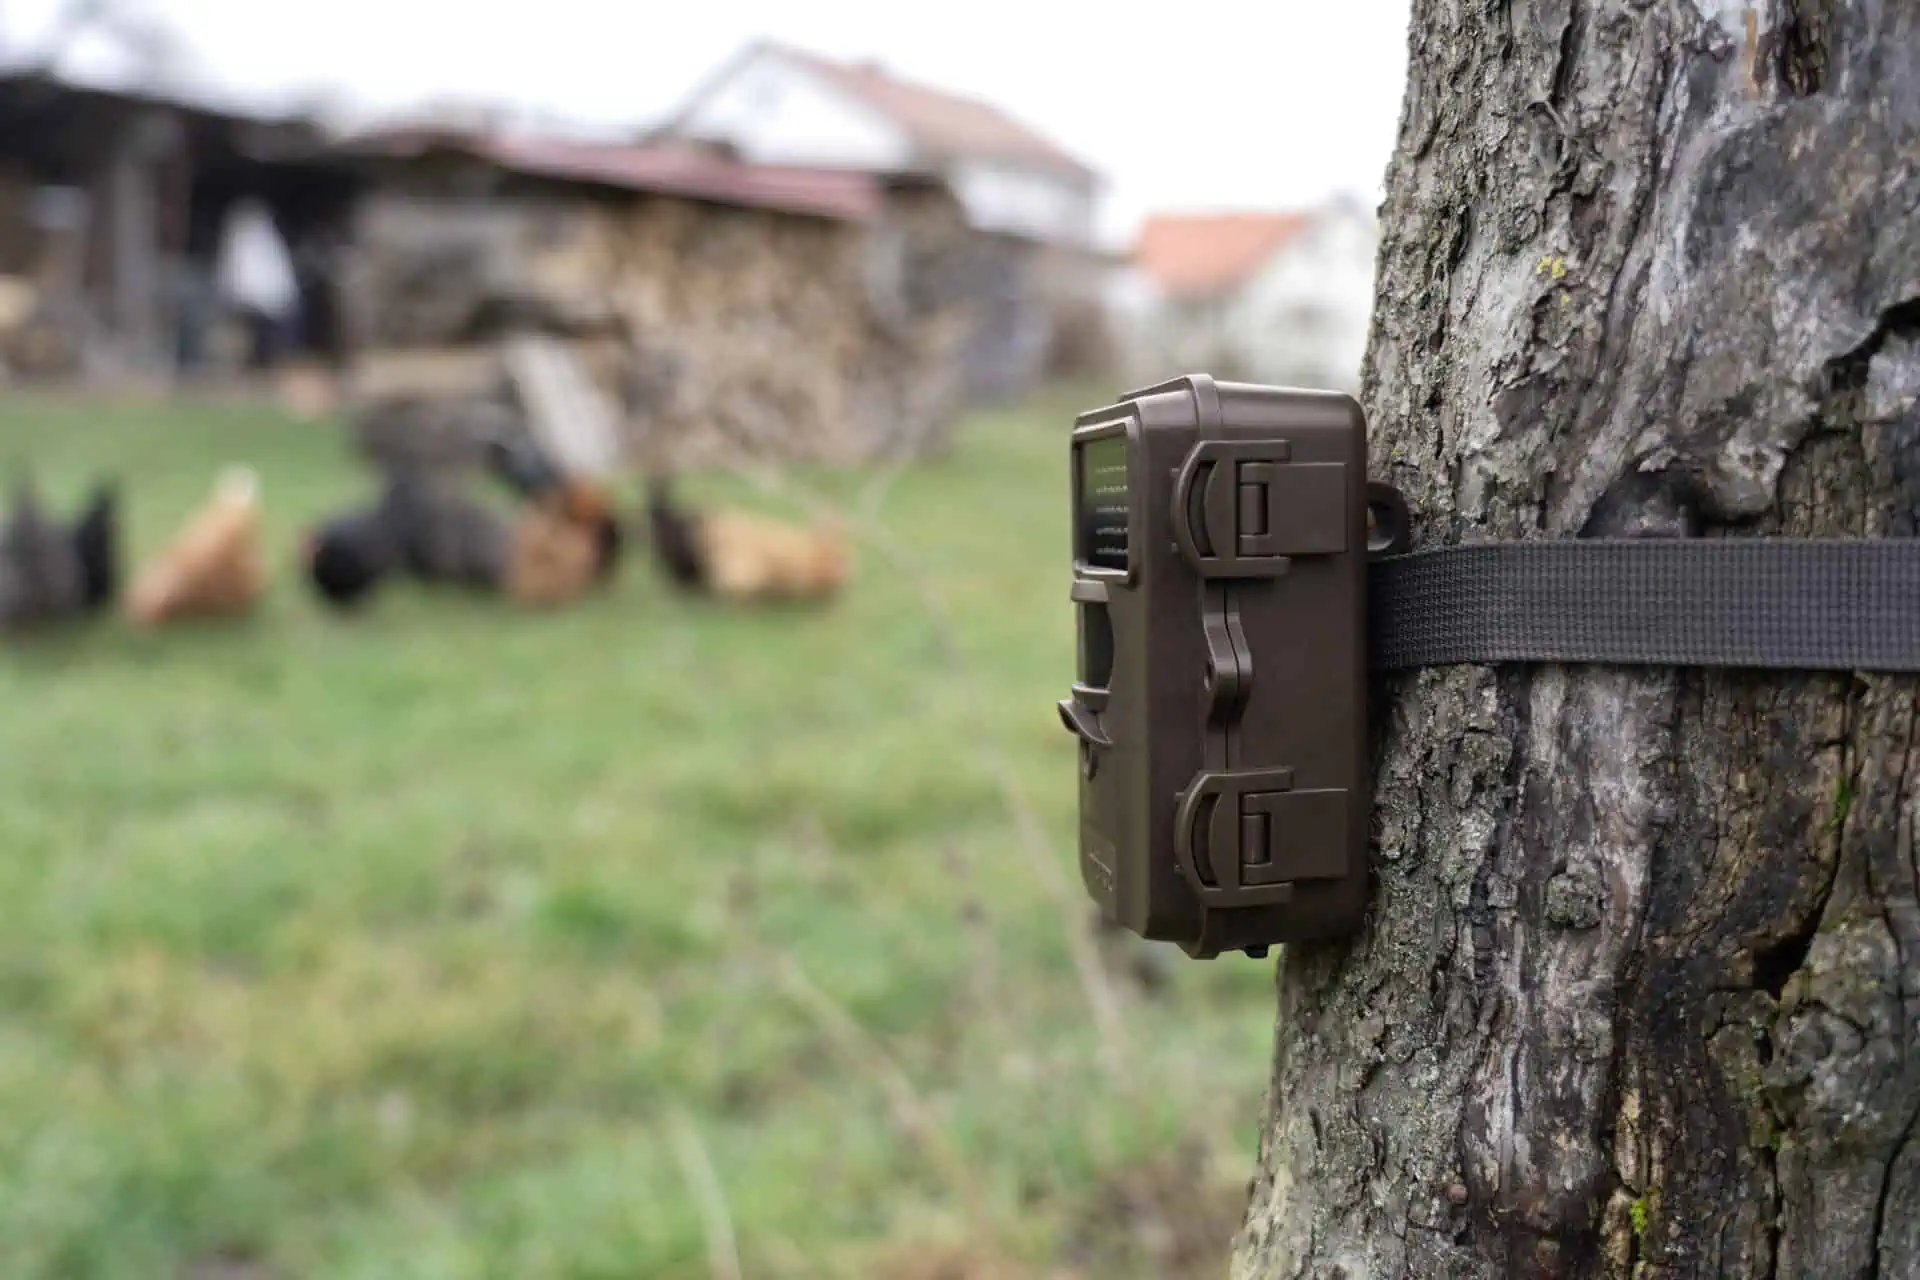 Surveillance camera SnapShot Mini Black 30MP 4K